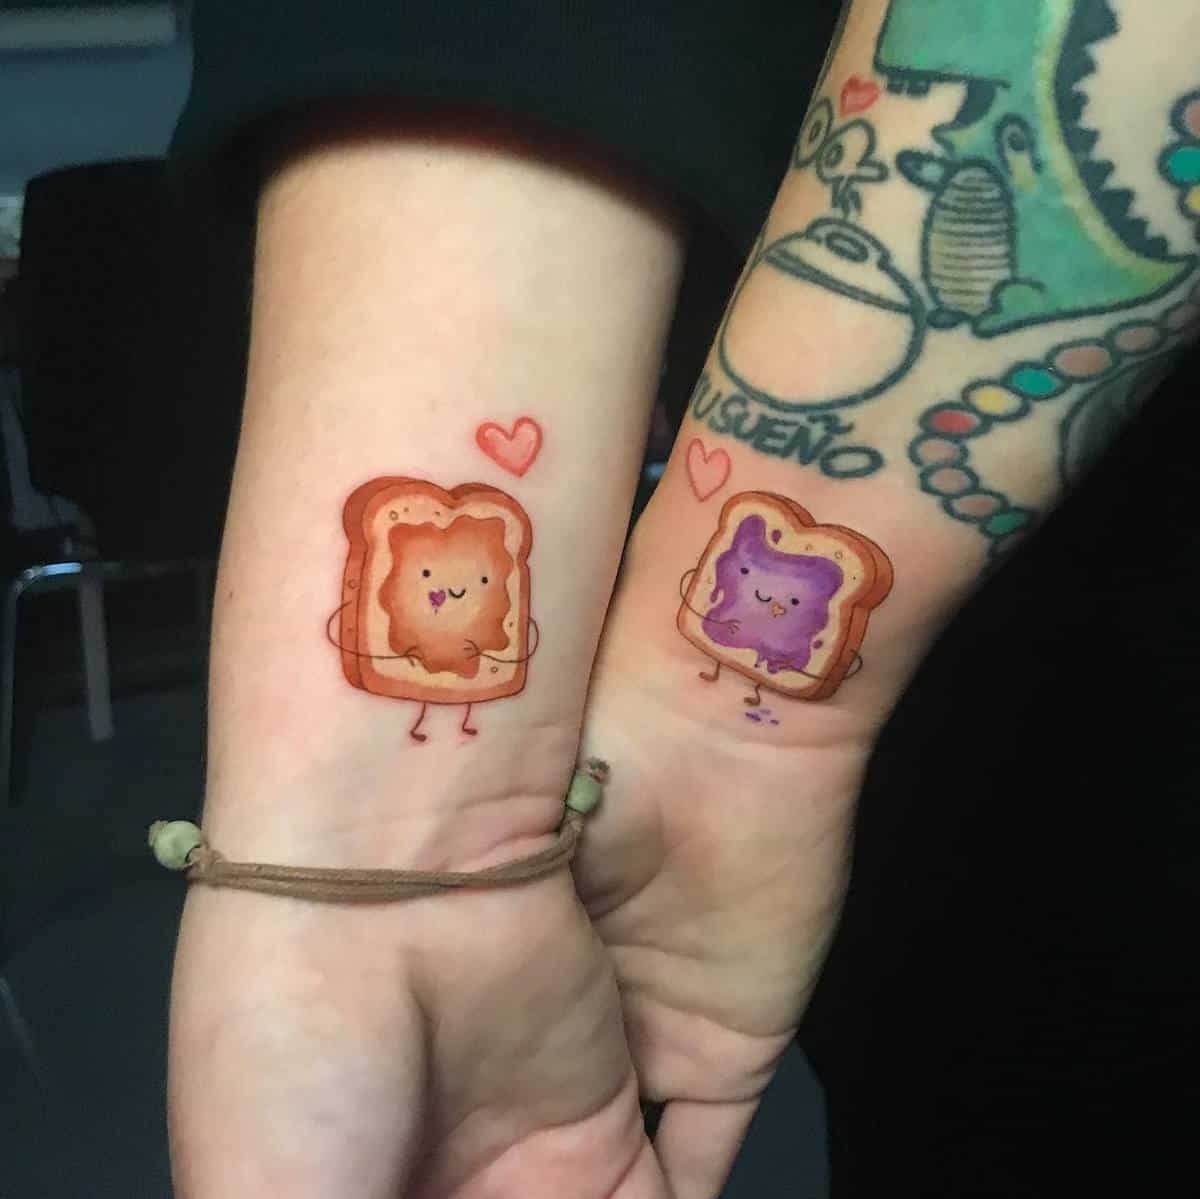 Relationship Matching Tattoos deannamaffeo